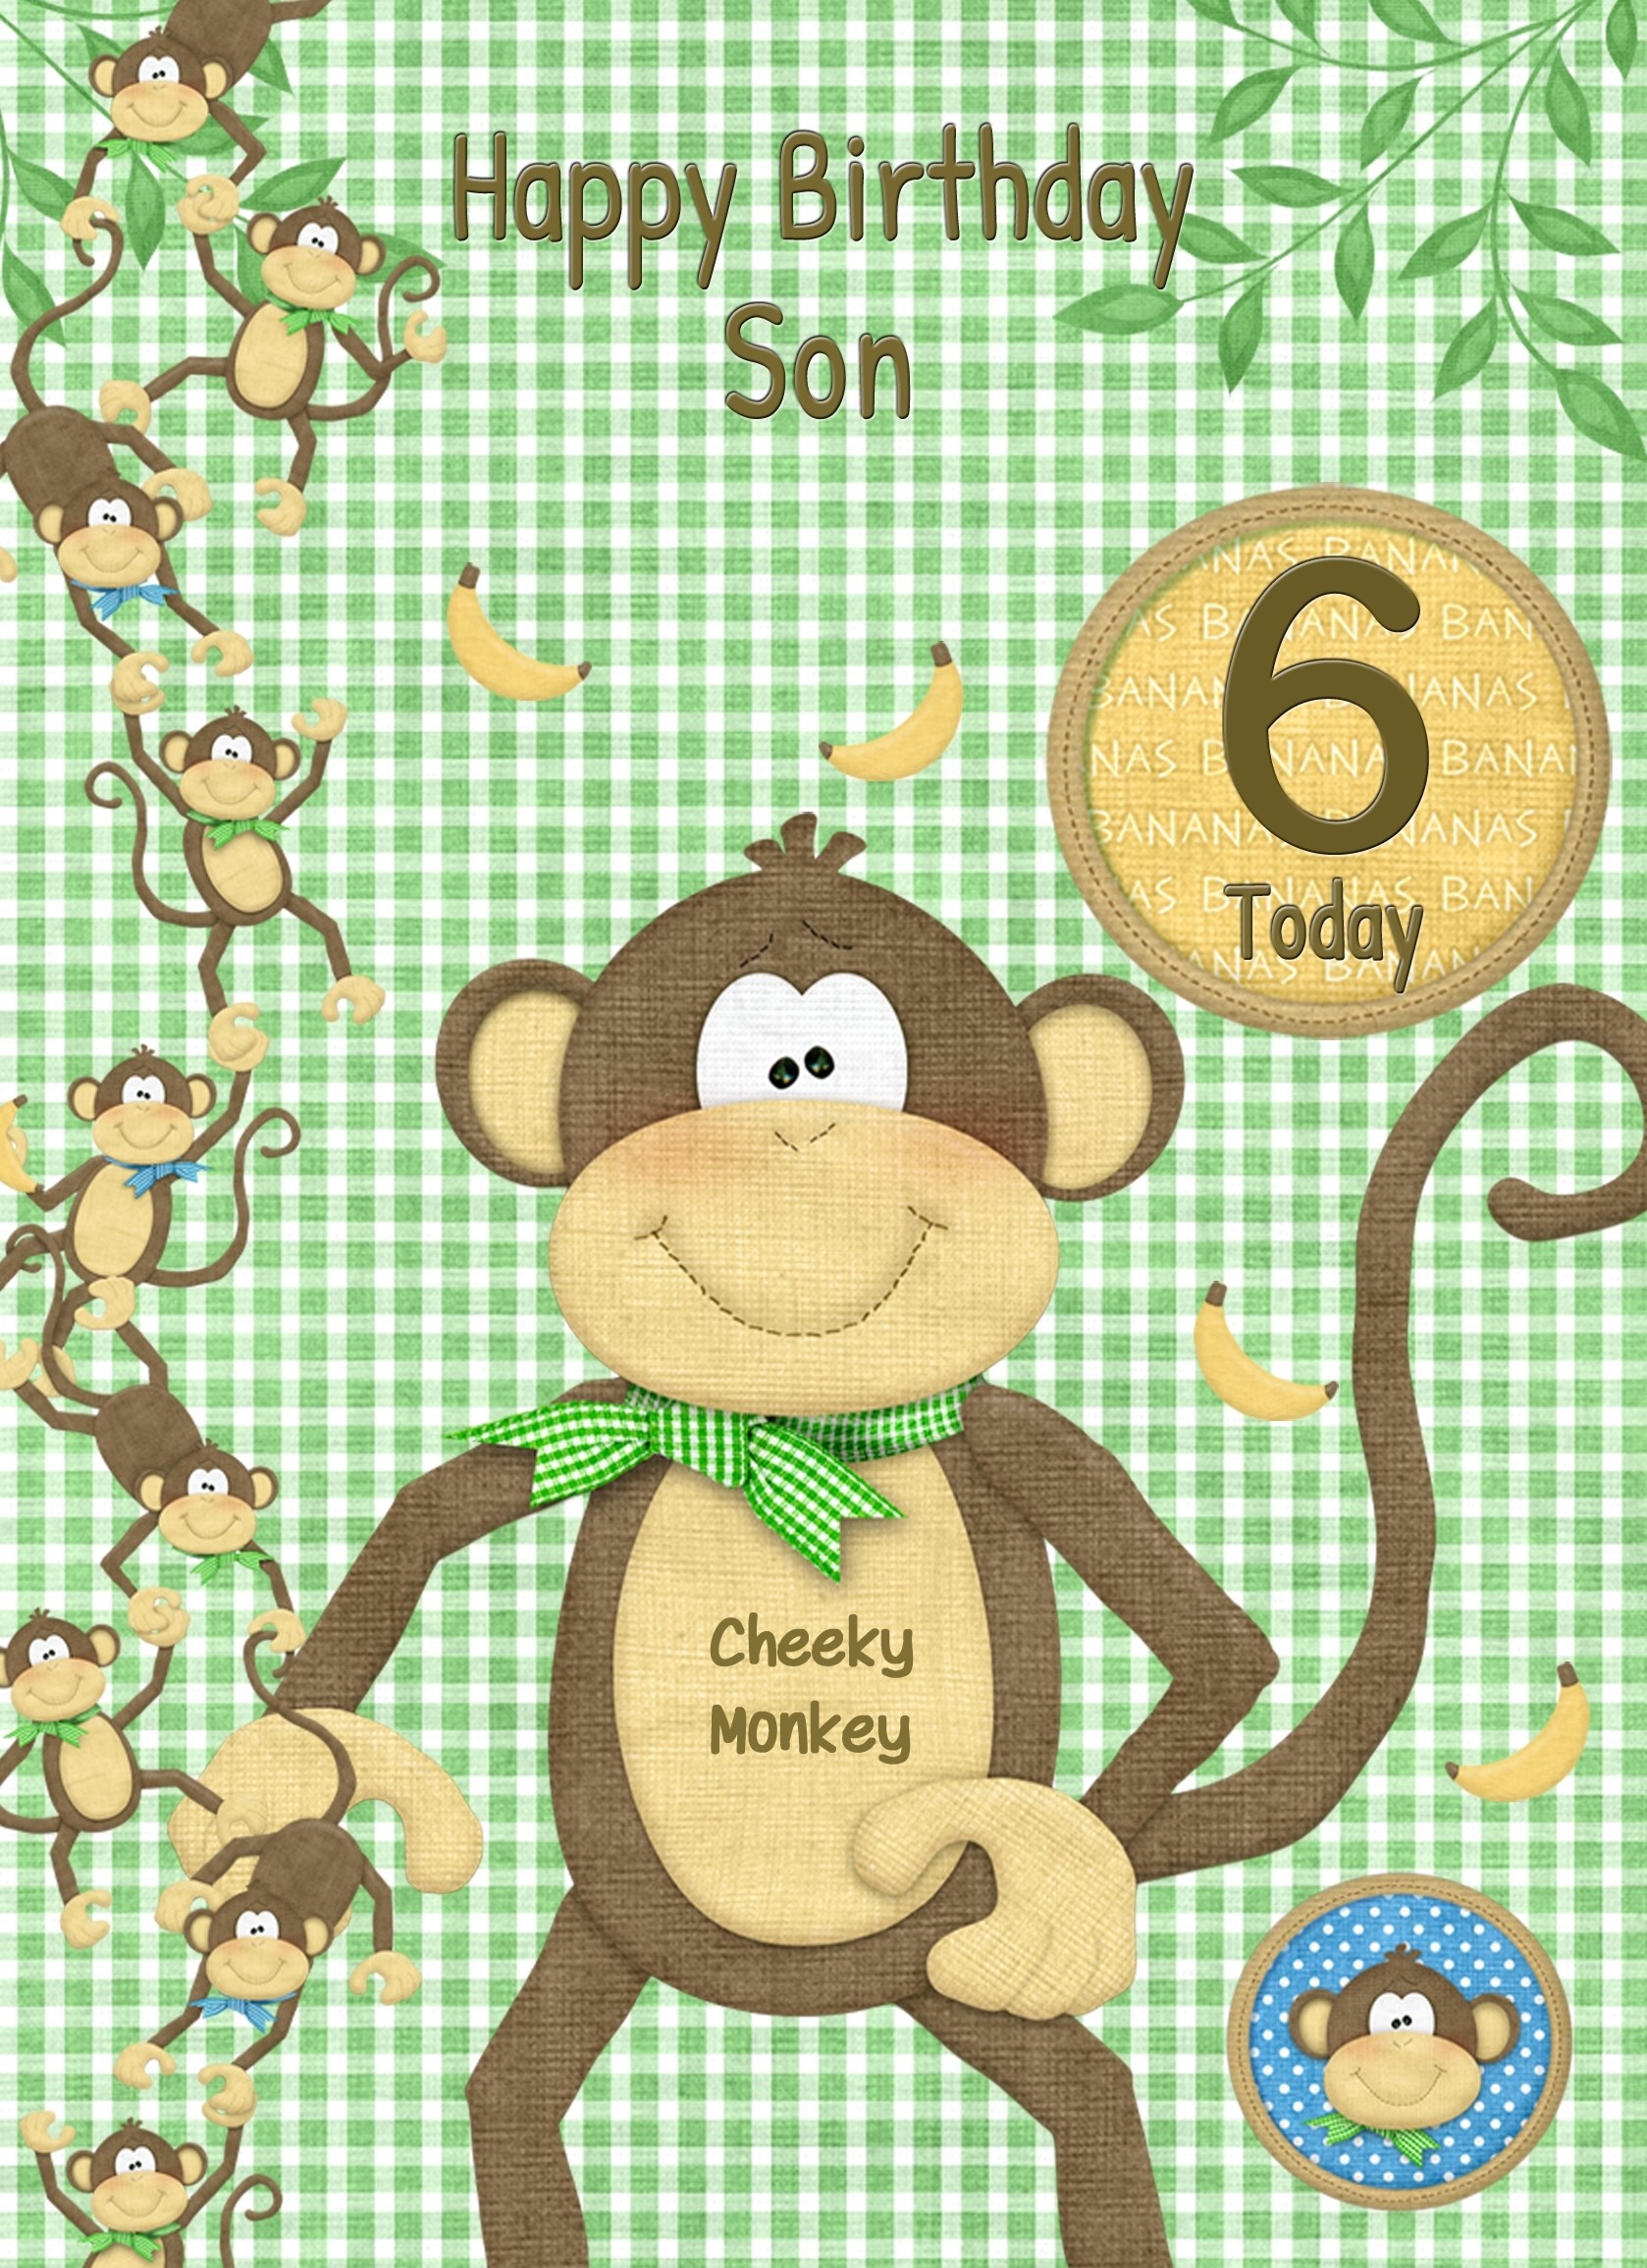 Kids 6th Birthday Cheeky Monkey Cartoon Card for Son